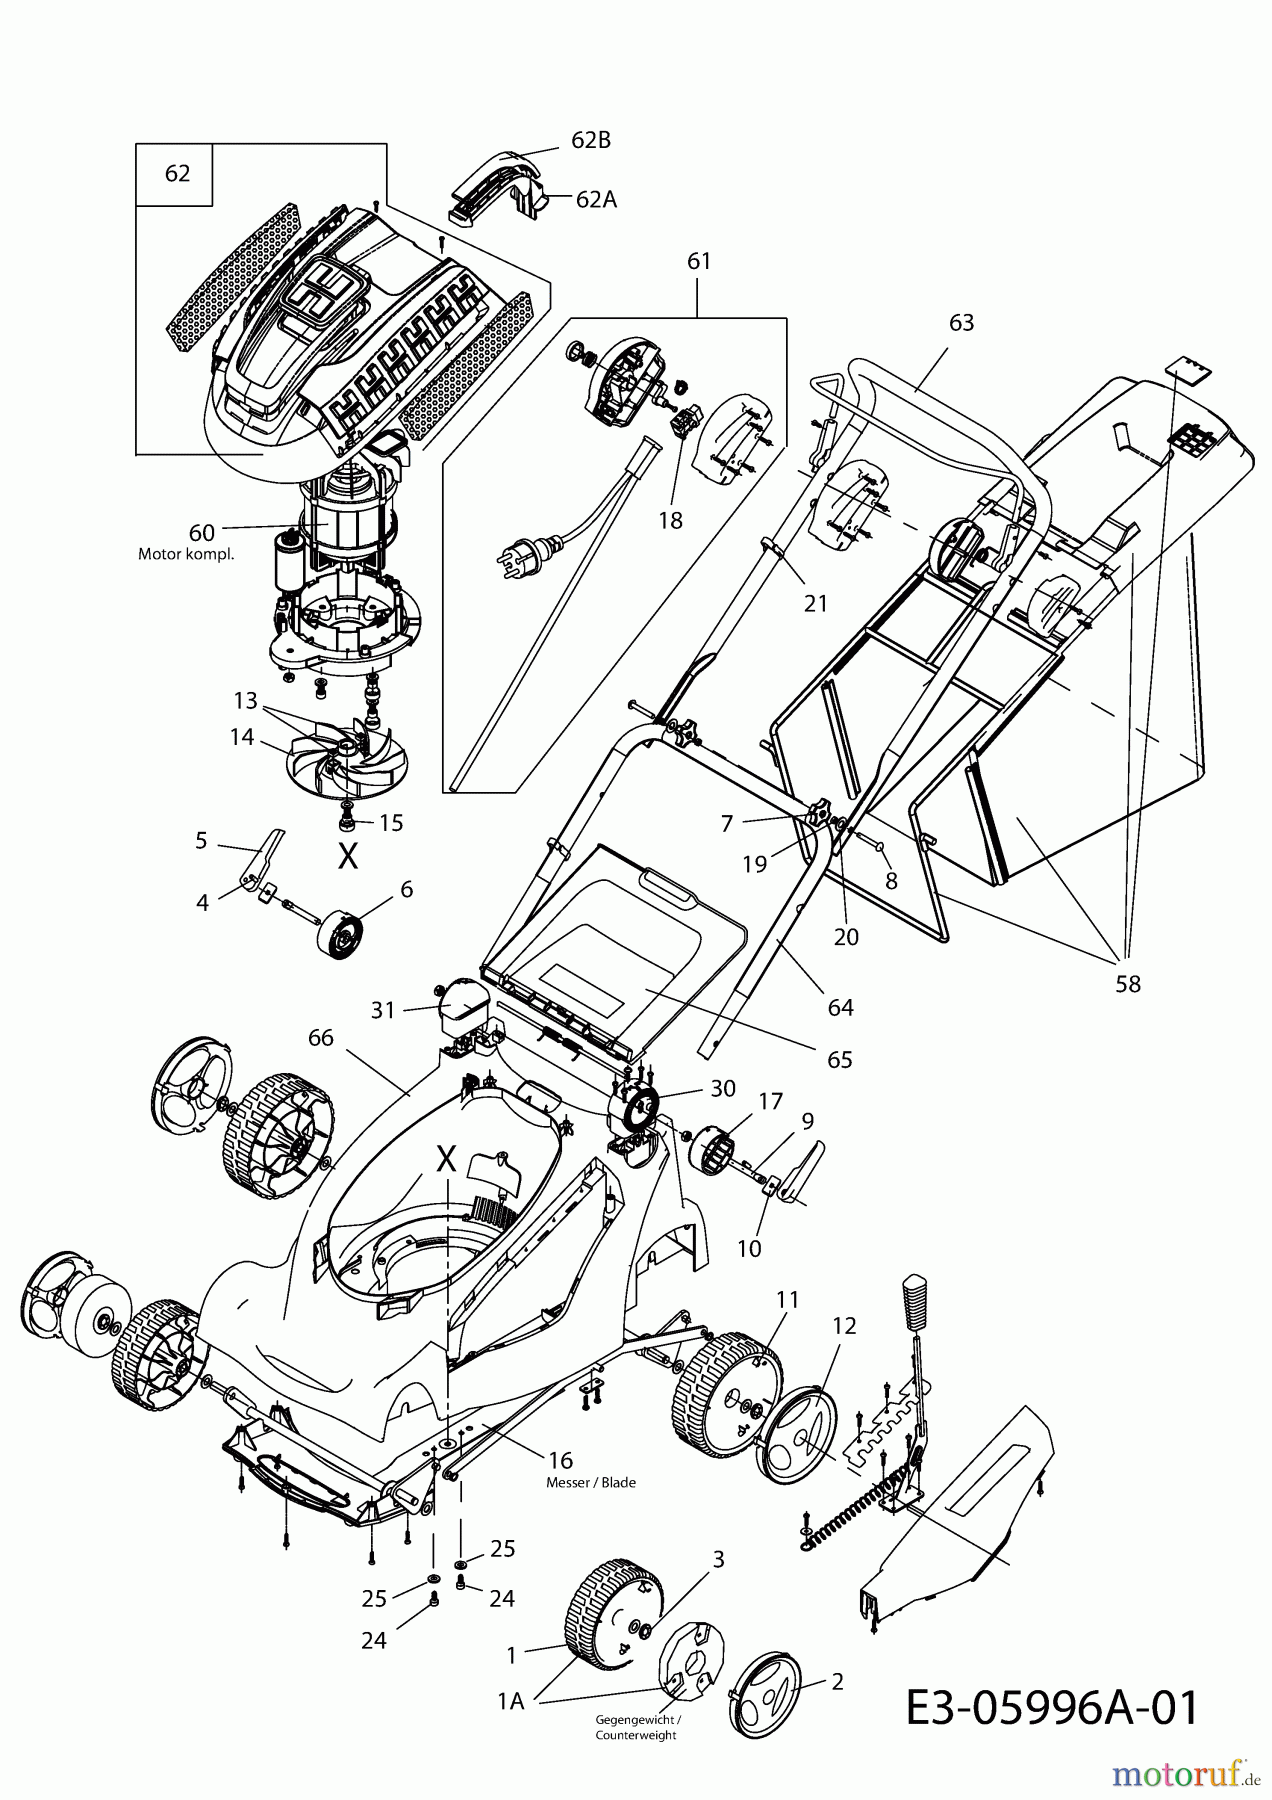  Plantiflor Electric mower ER 1842-1 18BCE4L2601  (2016) Basic machine